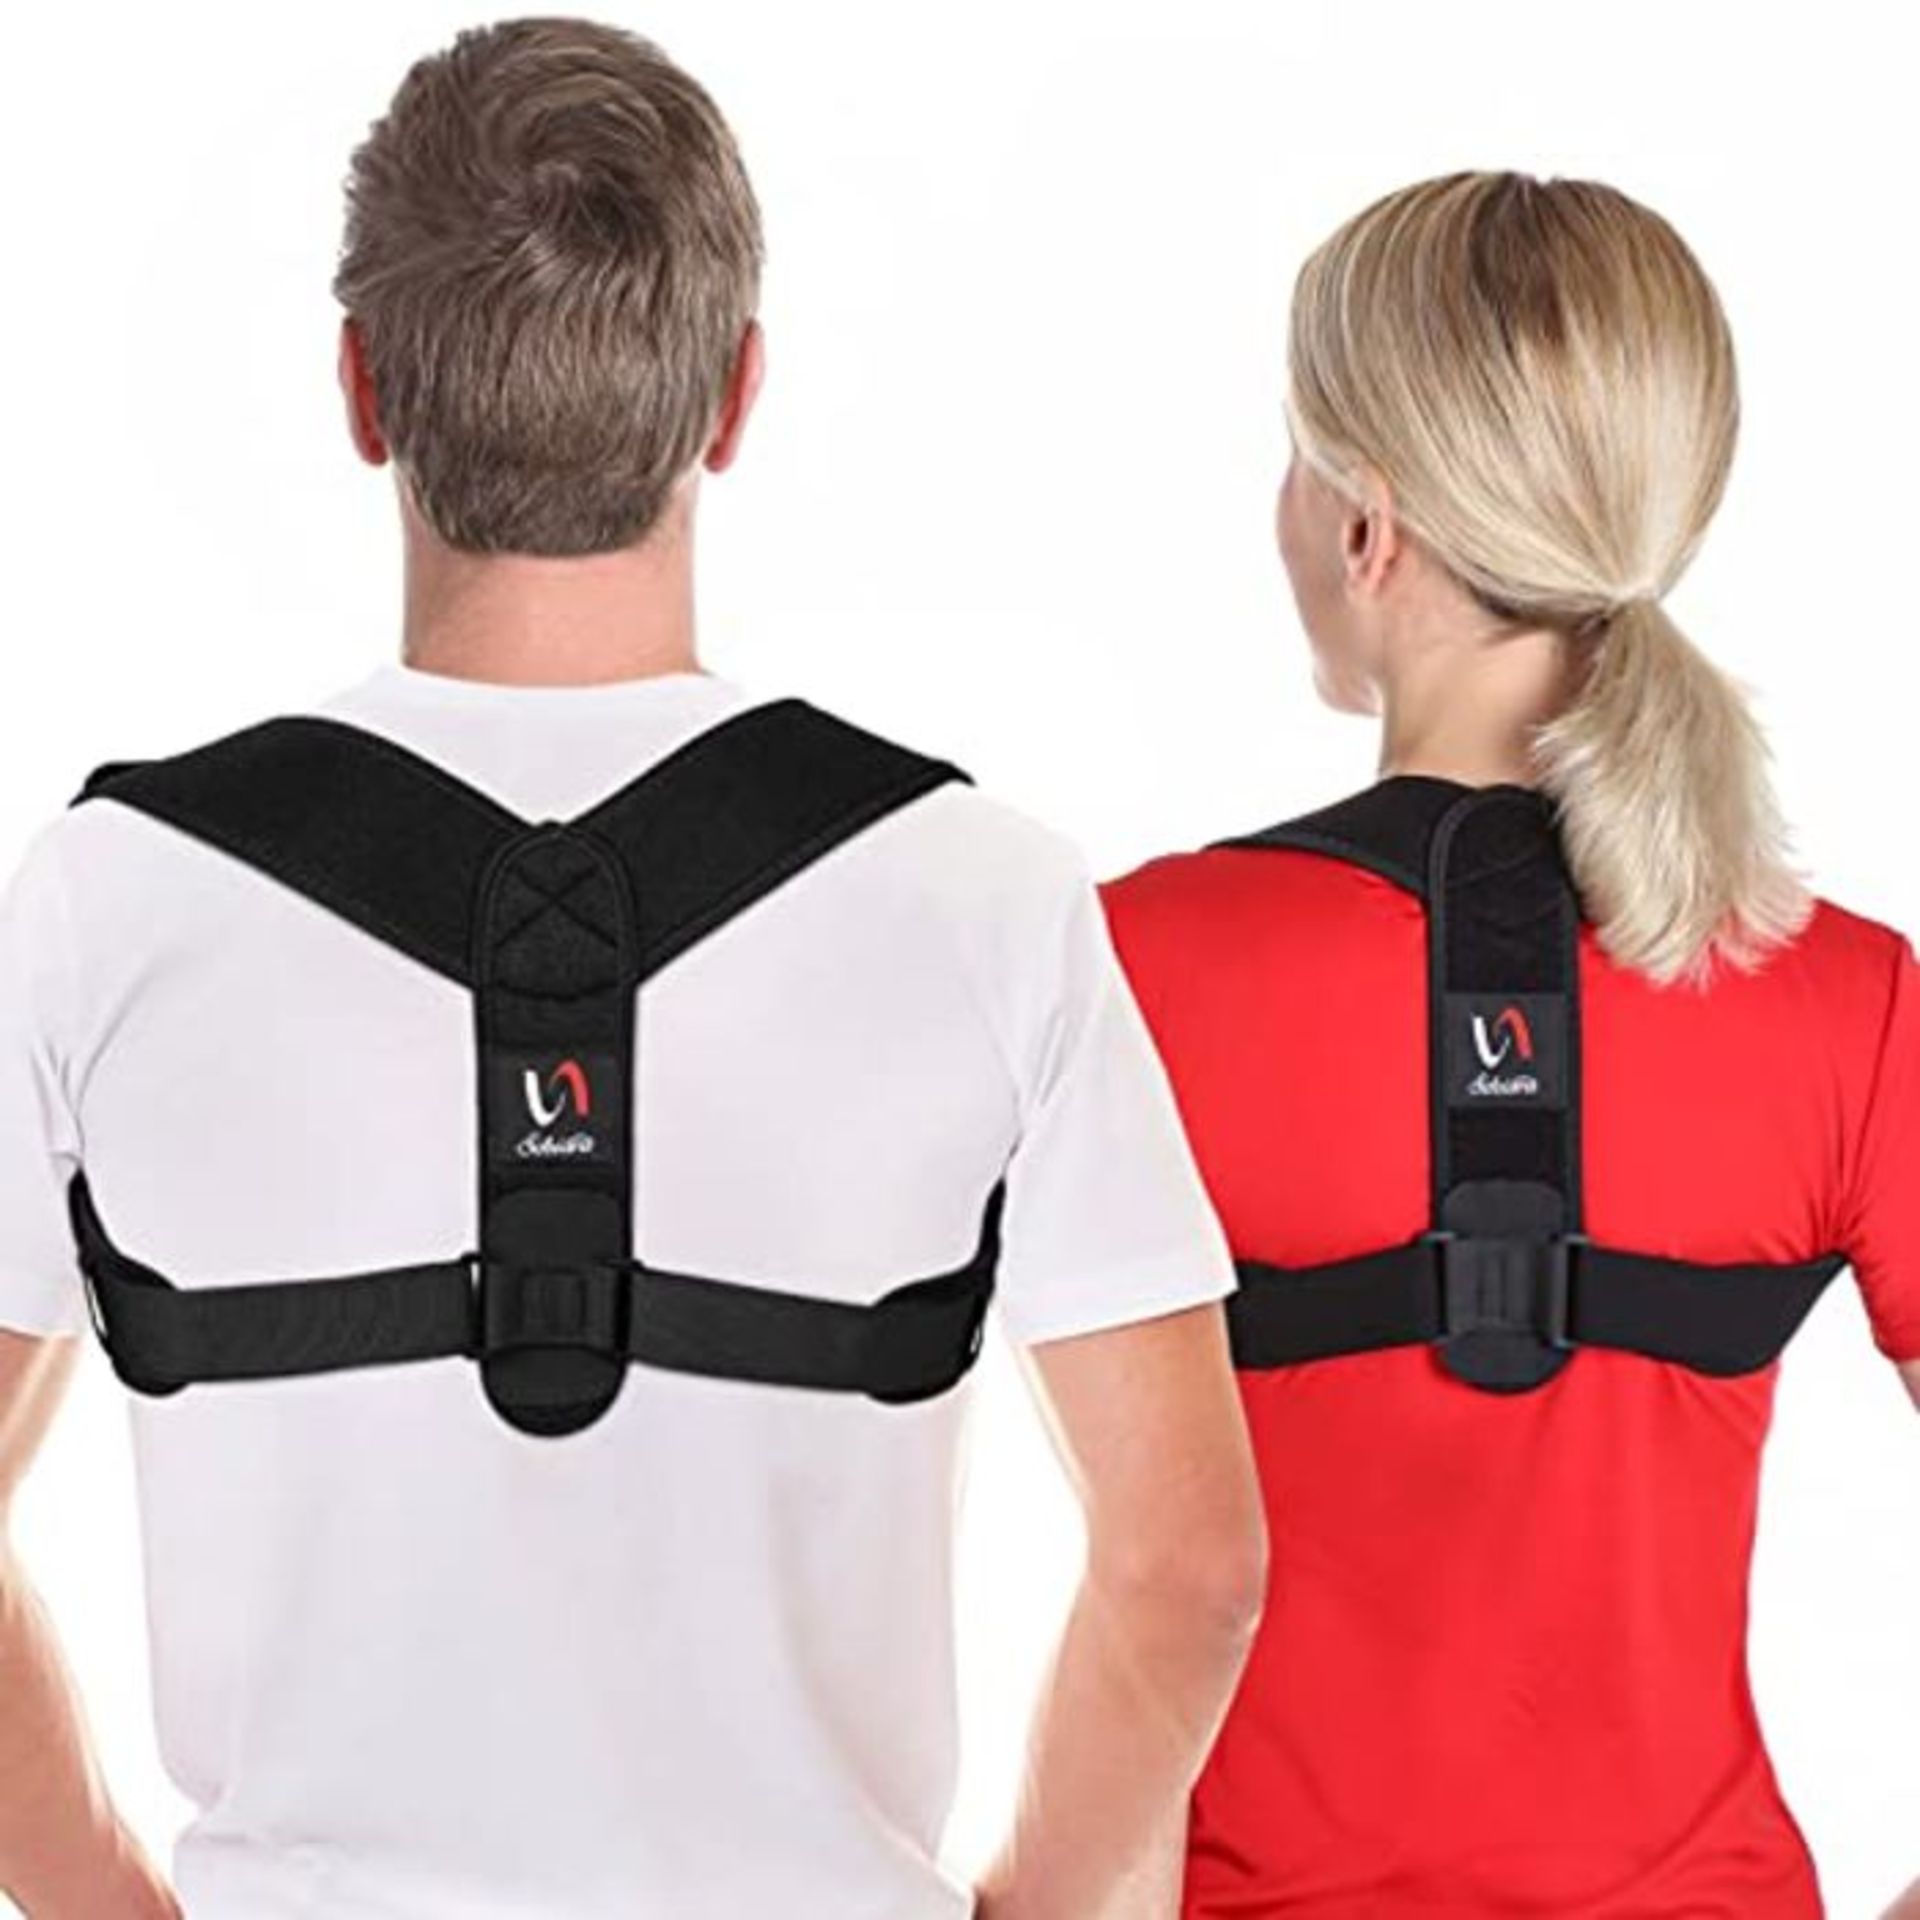 Schiara Posture Corrector for Men & Women - Comfortable Upper Back Brace, Adjustable B